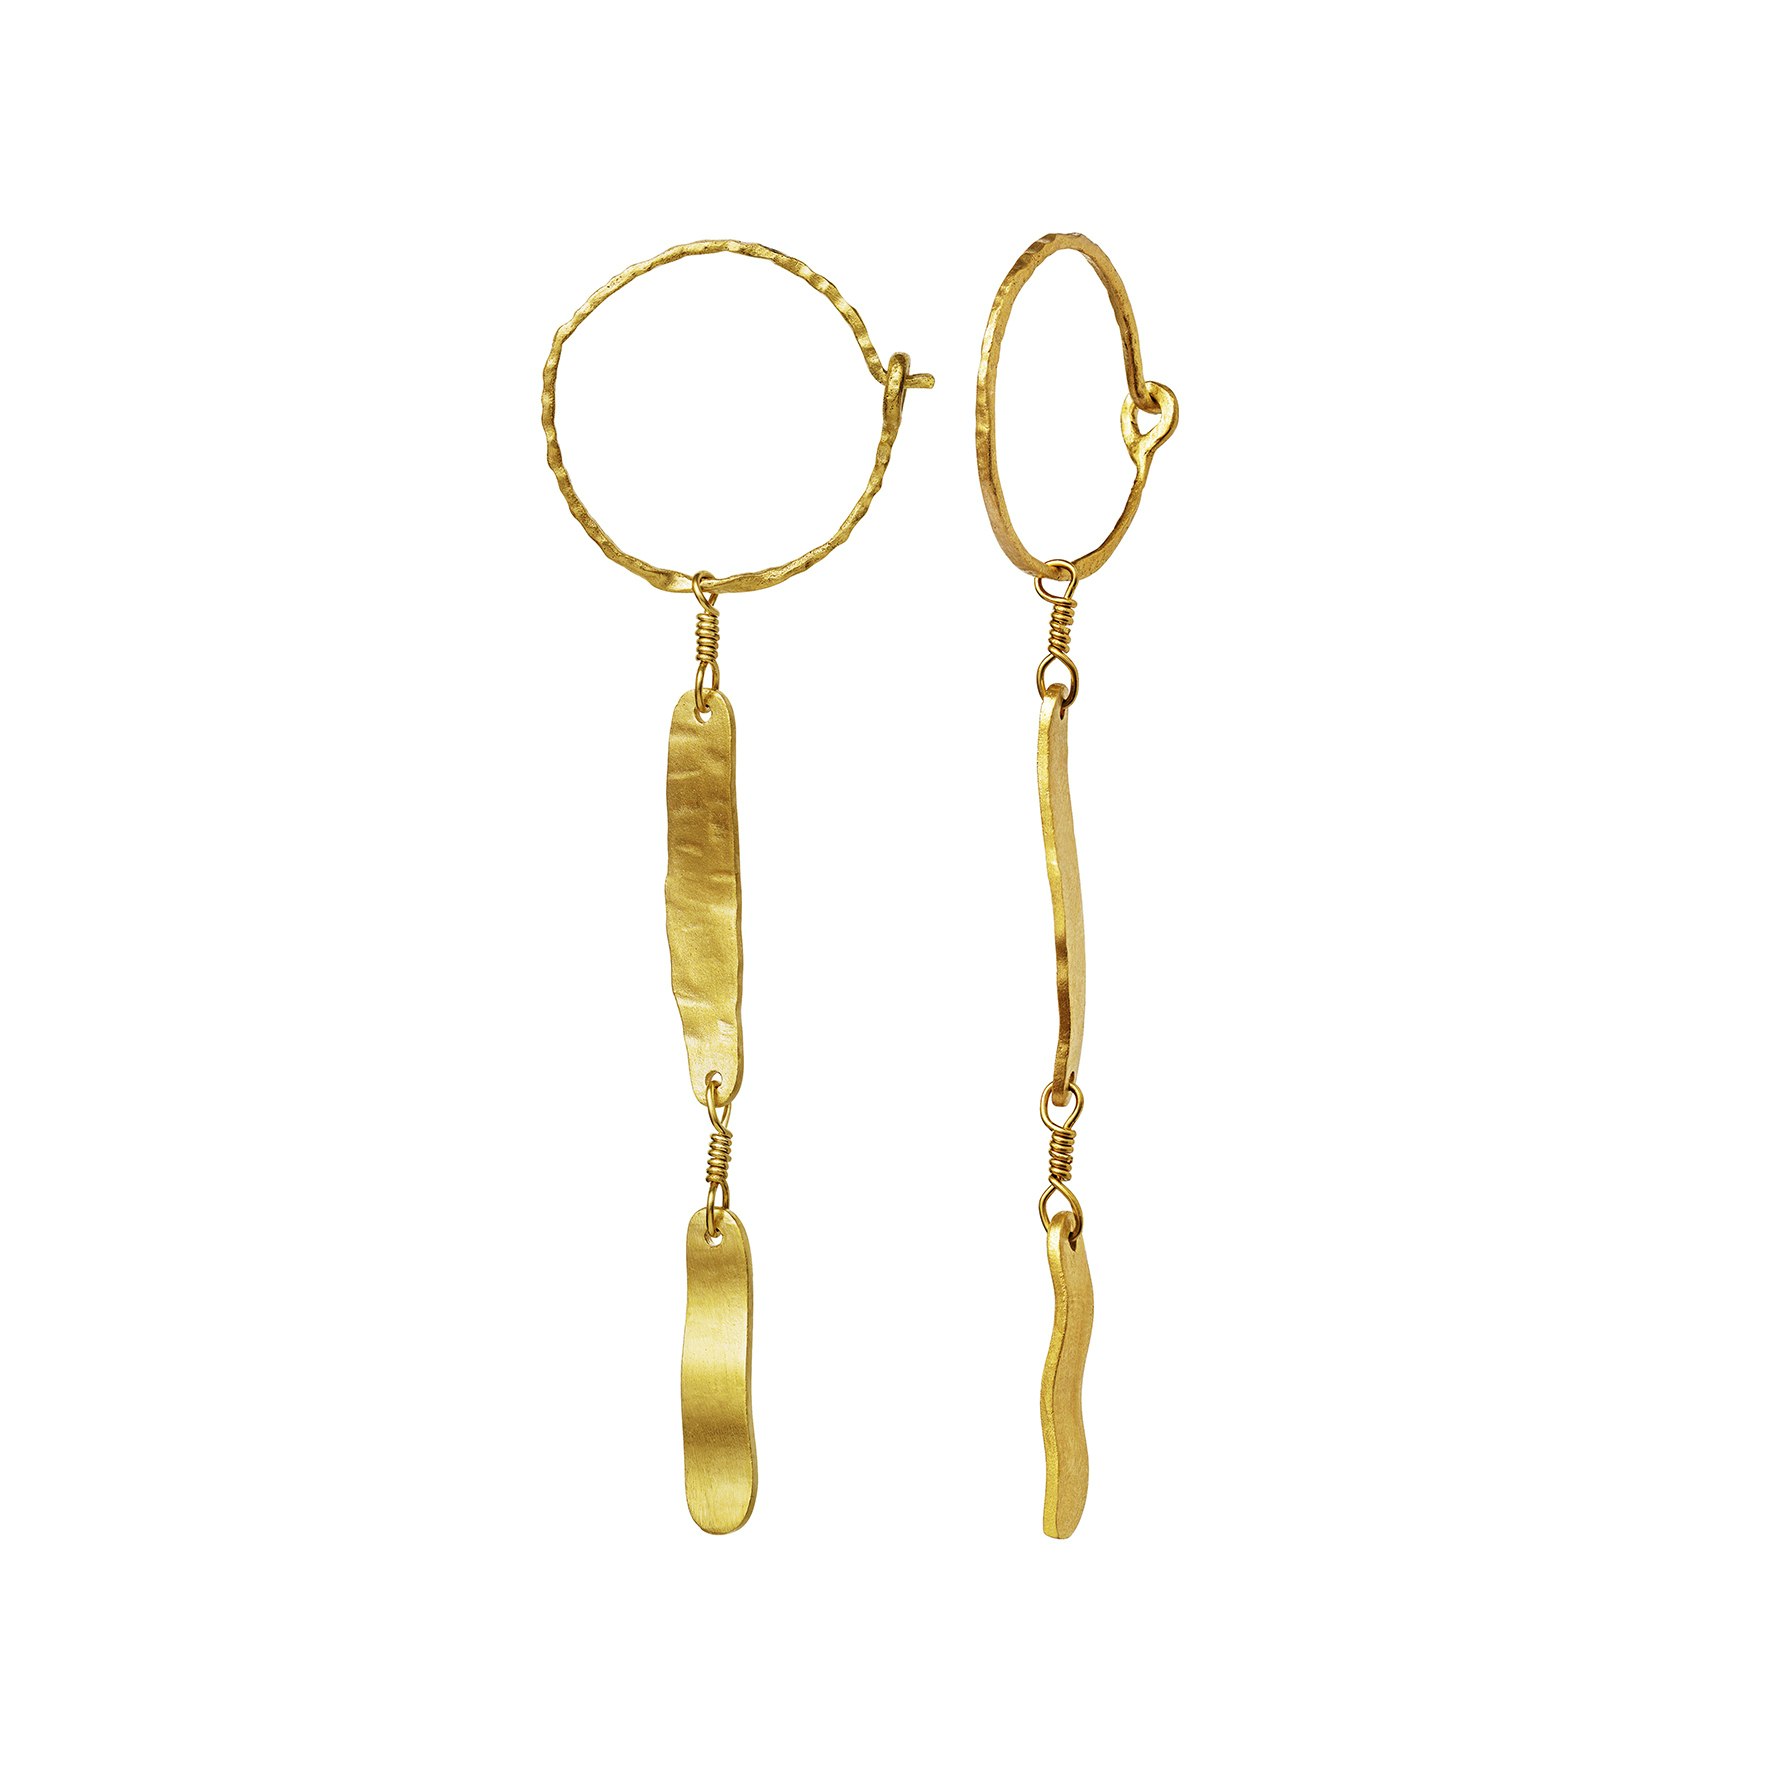 Lila Earrings von Maanesten in Vergoldet-Silber Sterling 925